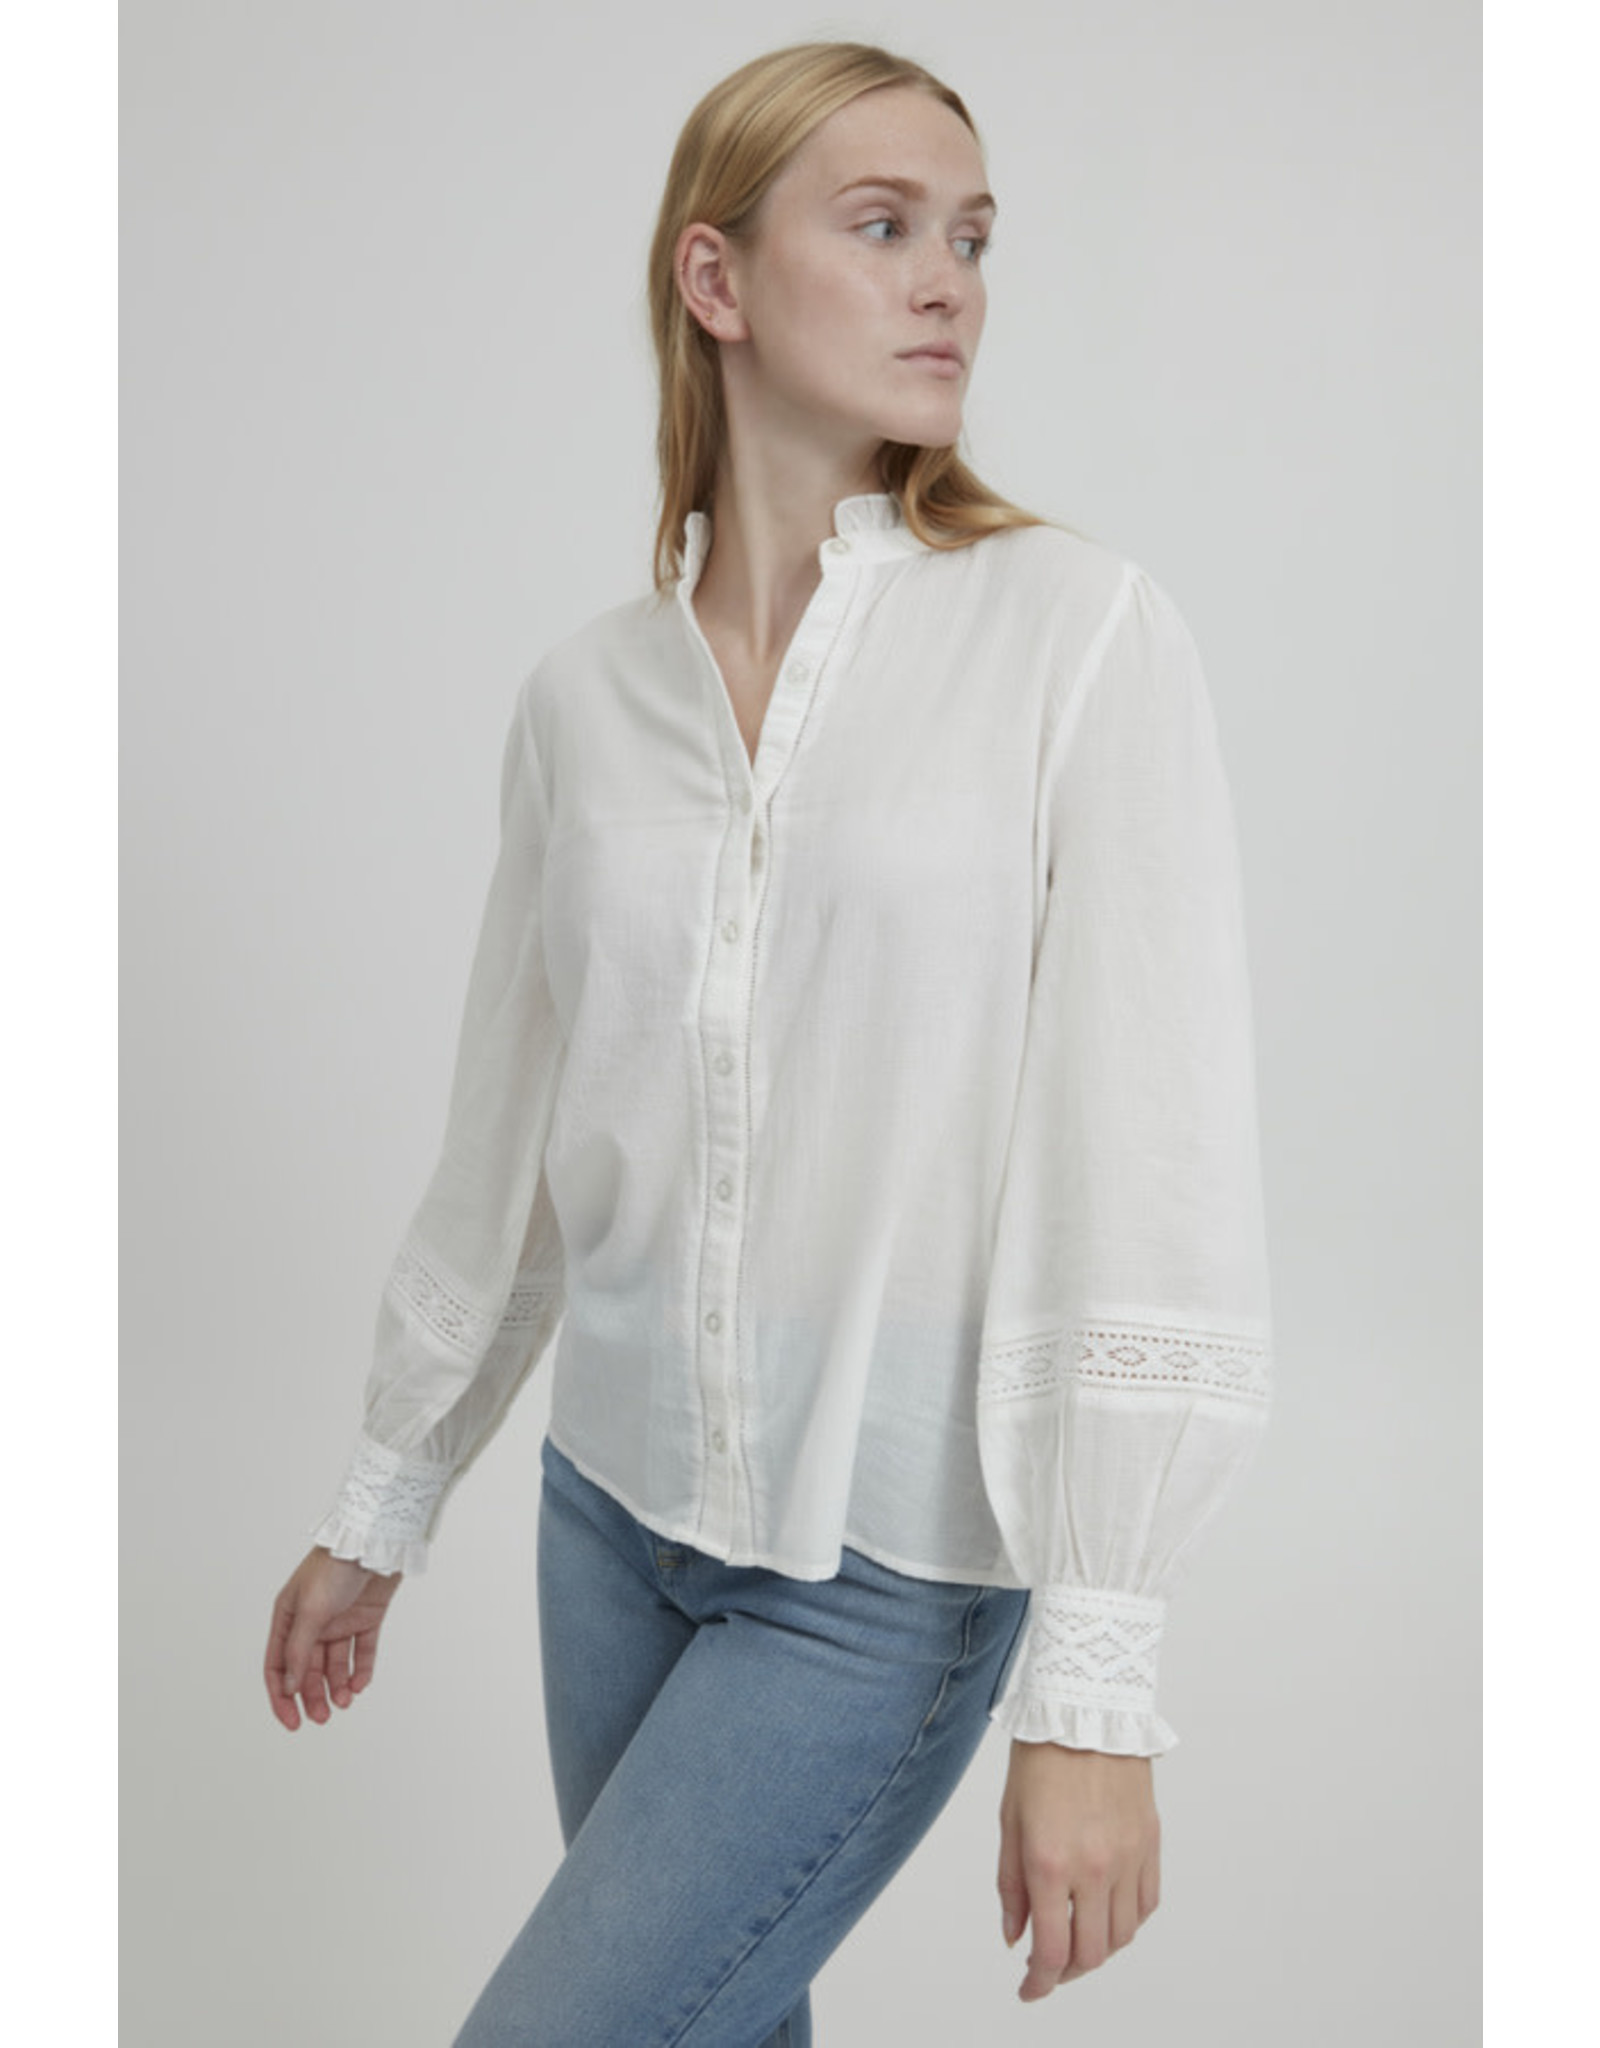 B.YOUNG Janina lace shirt - off white